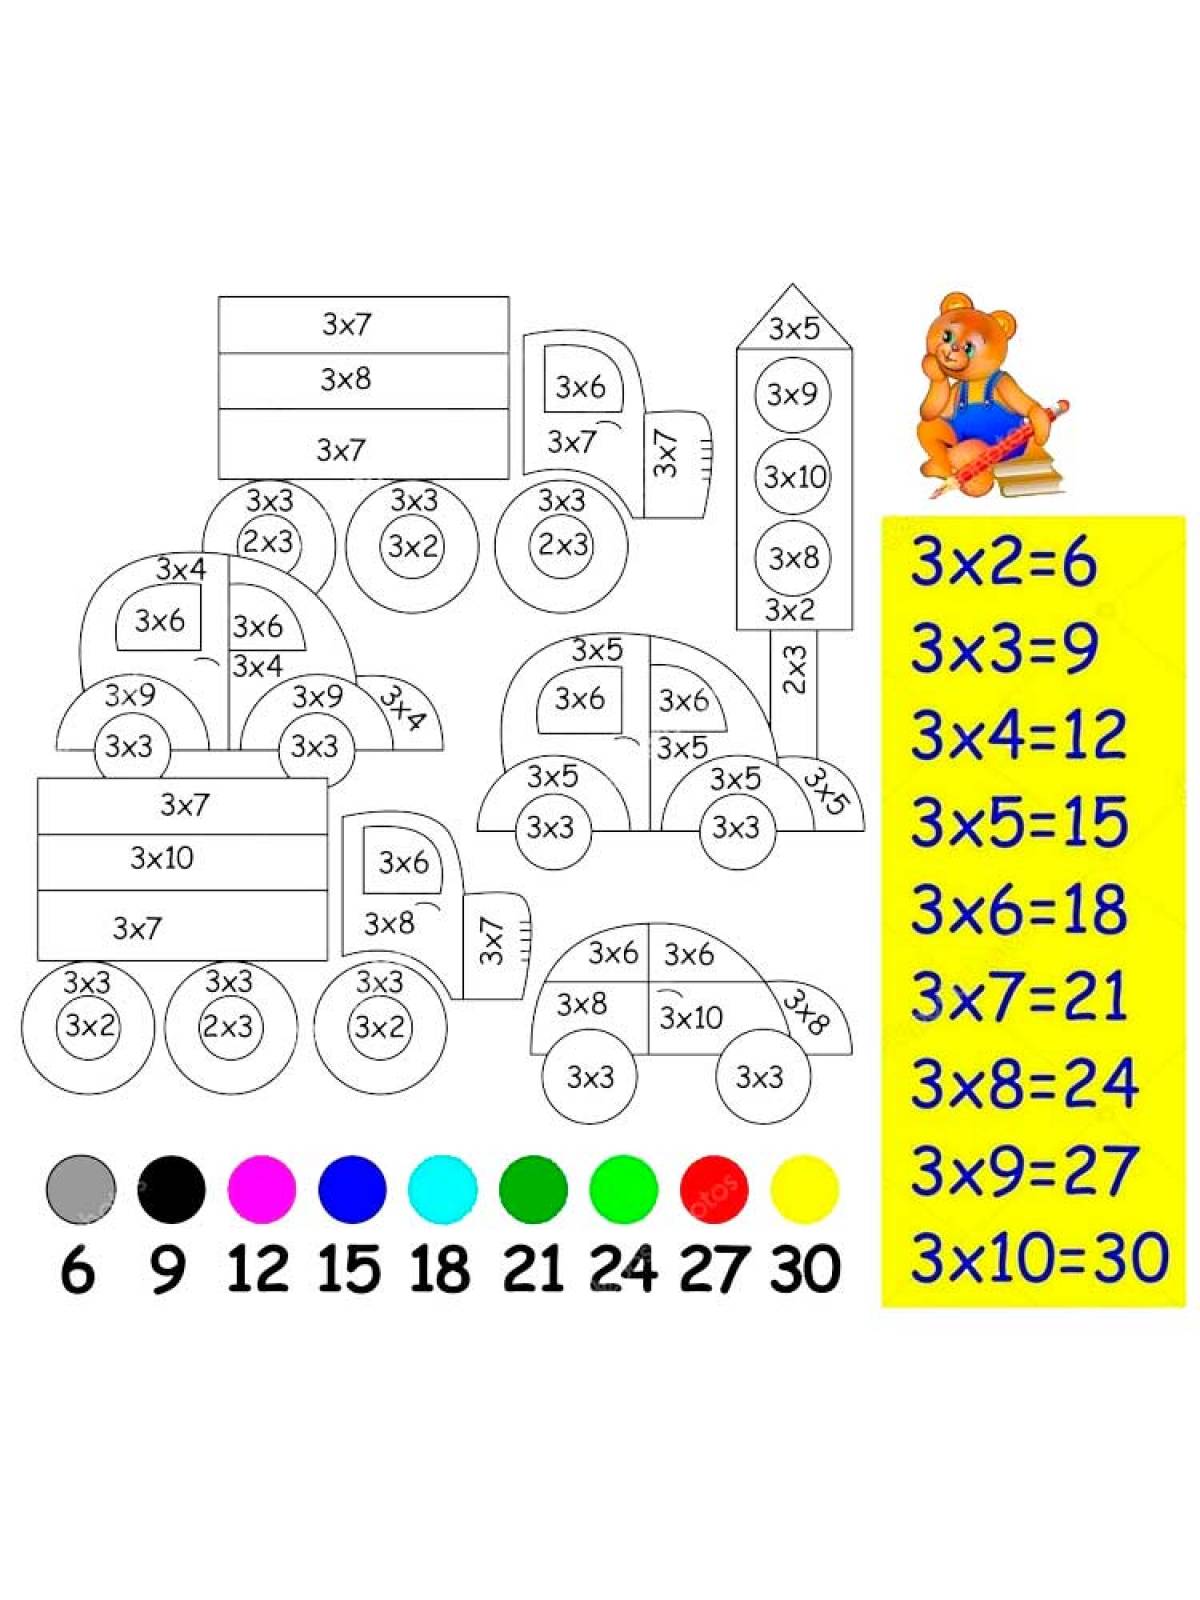 Multiplication table 7